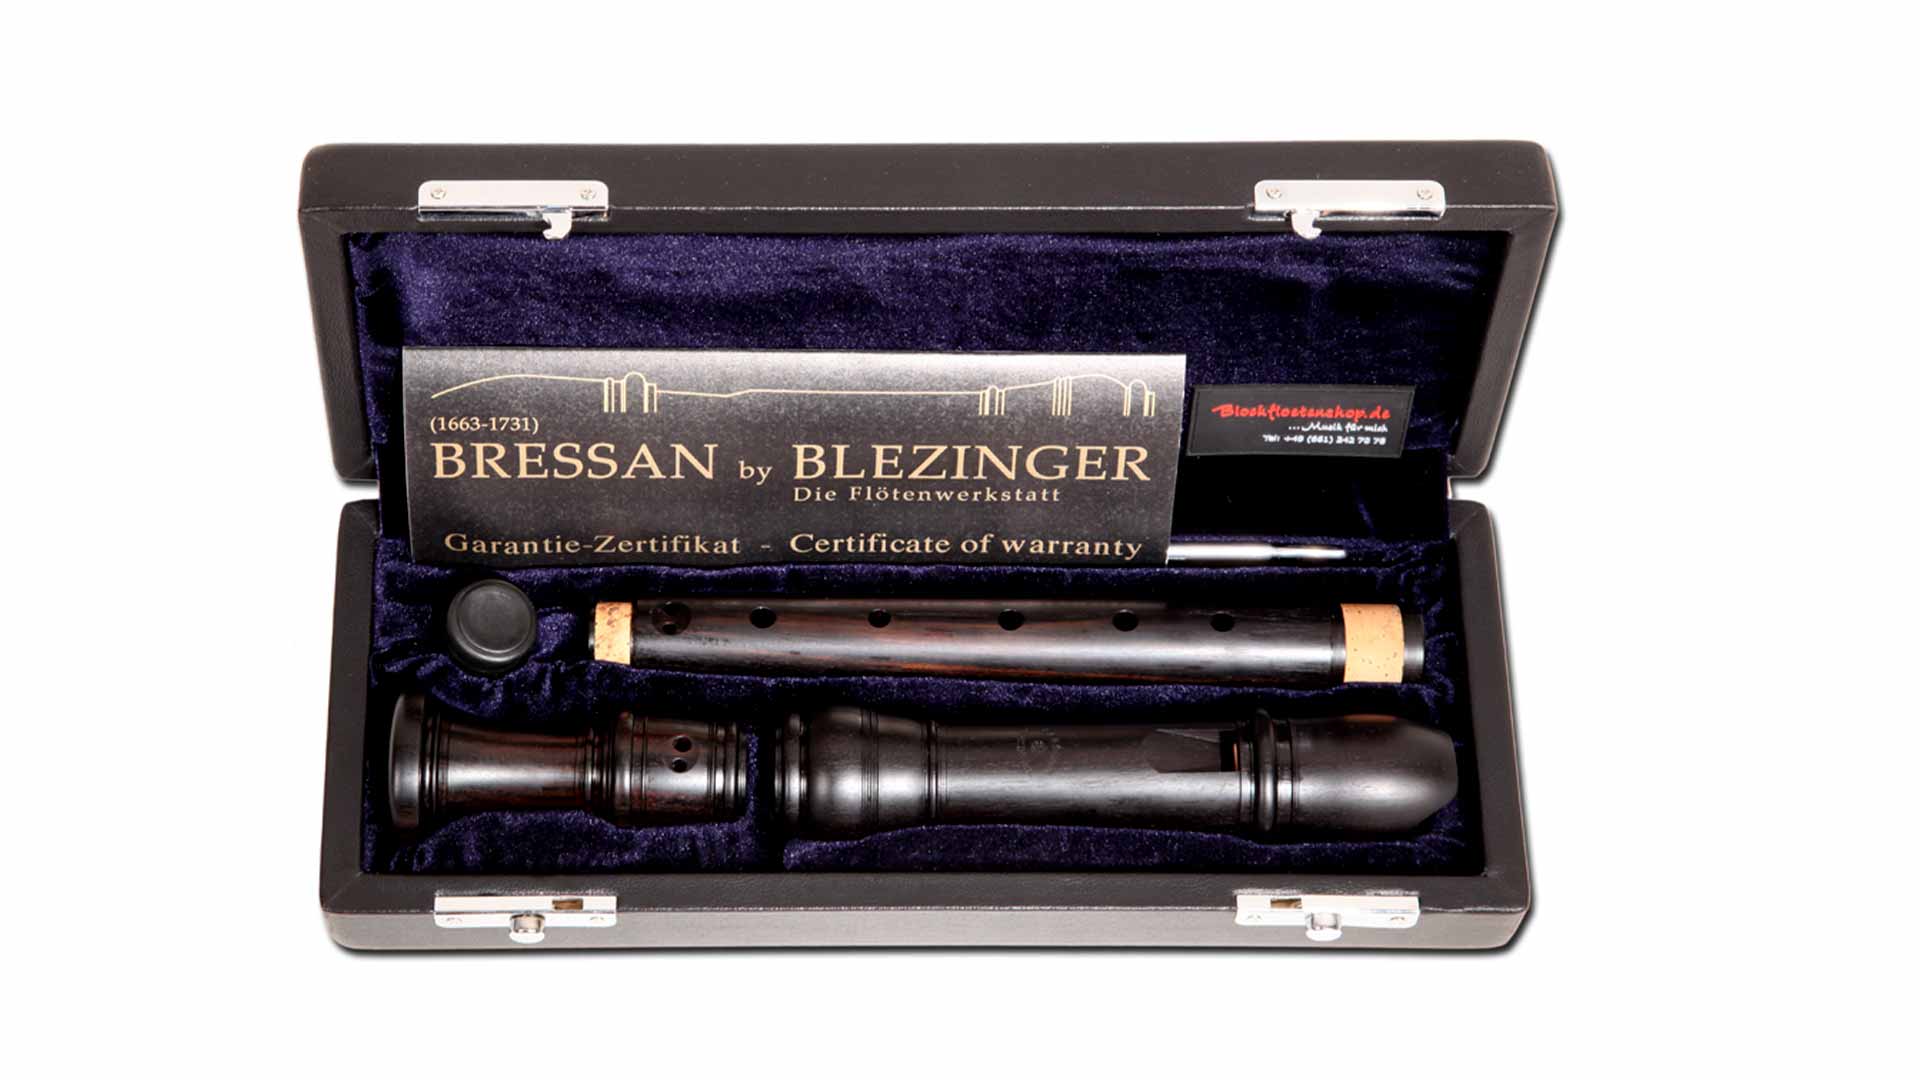 Bressan by Blezinger, alto in f', baroque double hole, 442 Hz, grenadilla